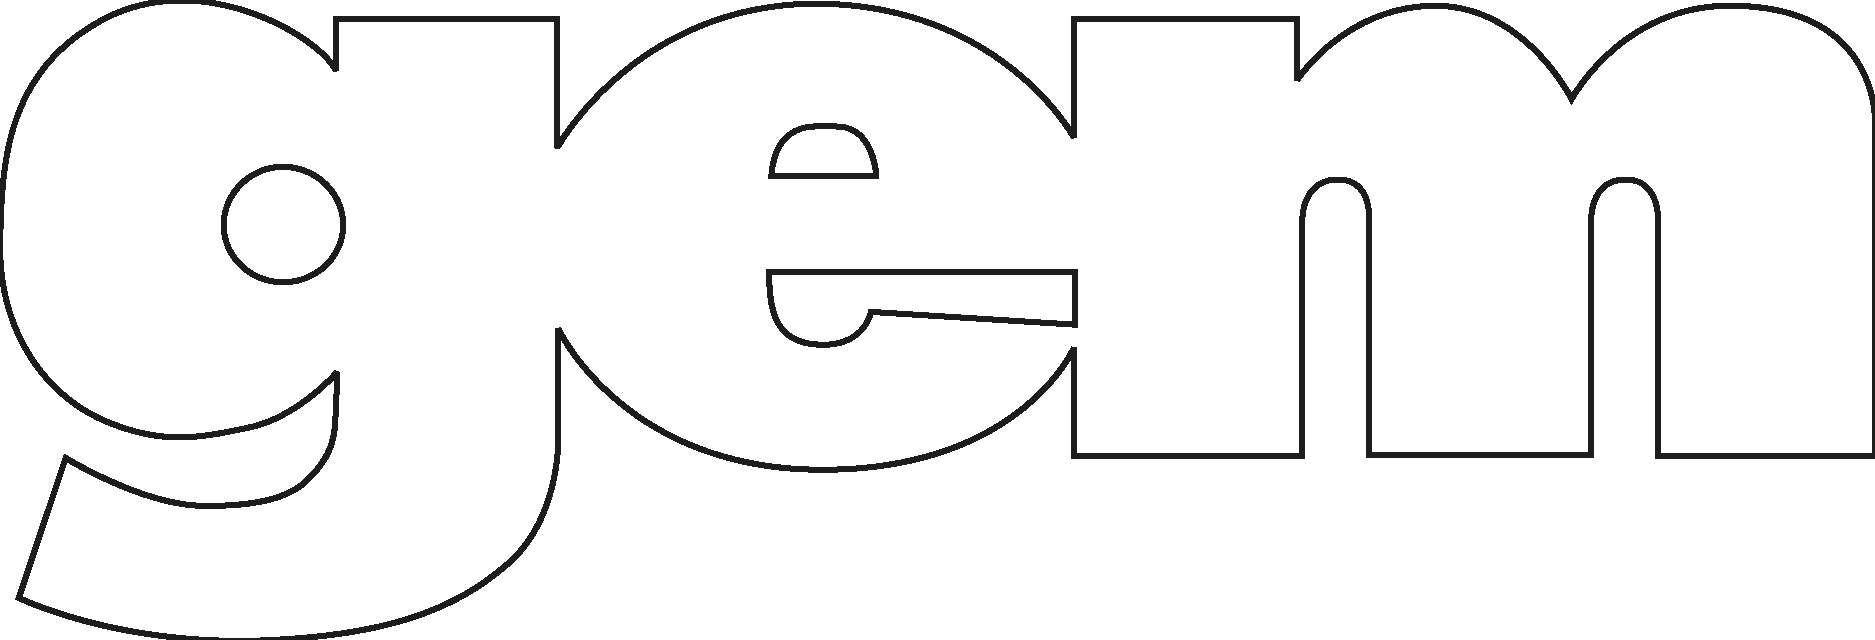 File:Screen Gems S Logo.svg - Wikipedia